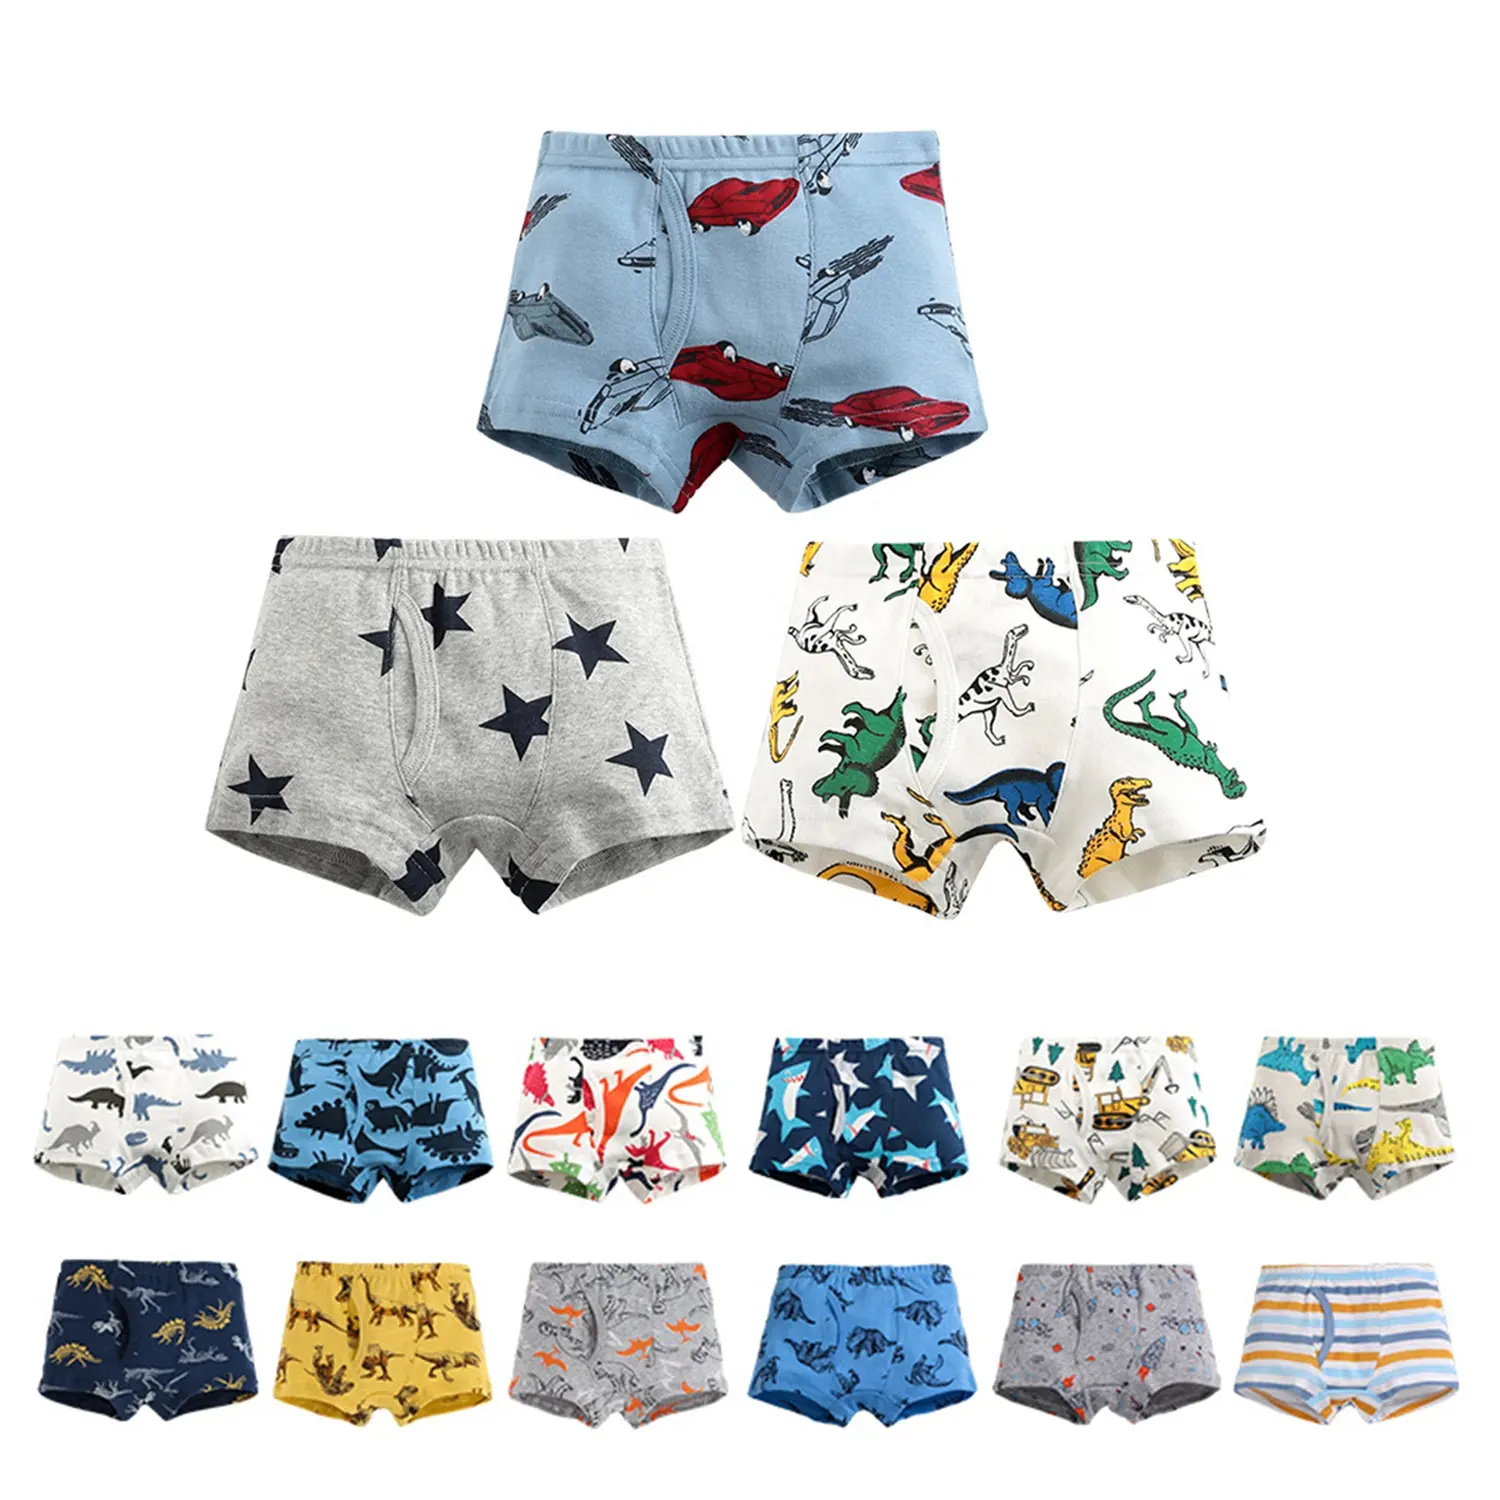 Wholesale/ODM/OEM 100%cotton Boys Underwear Panties Briefs